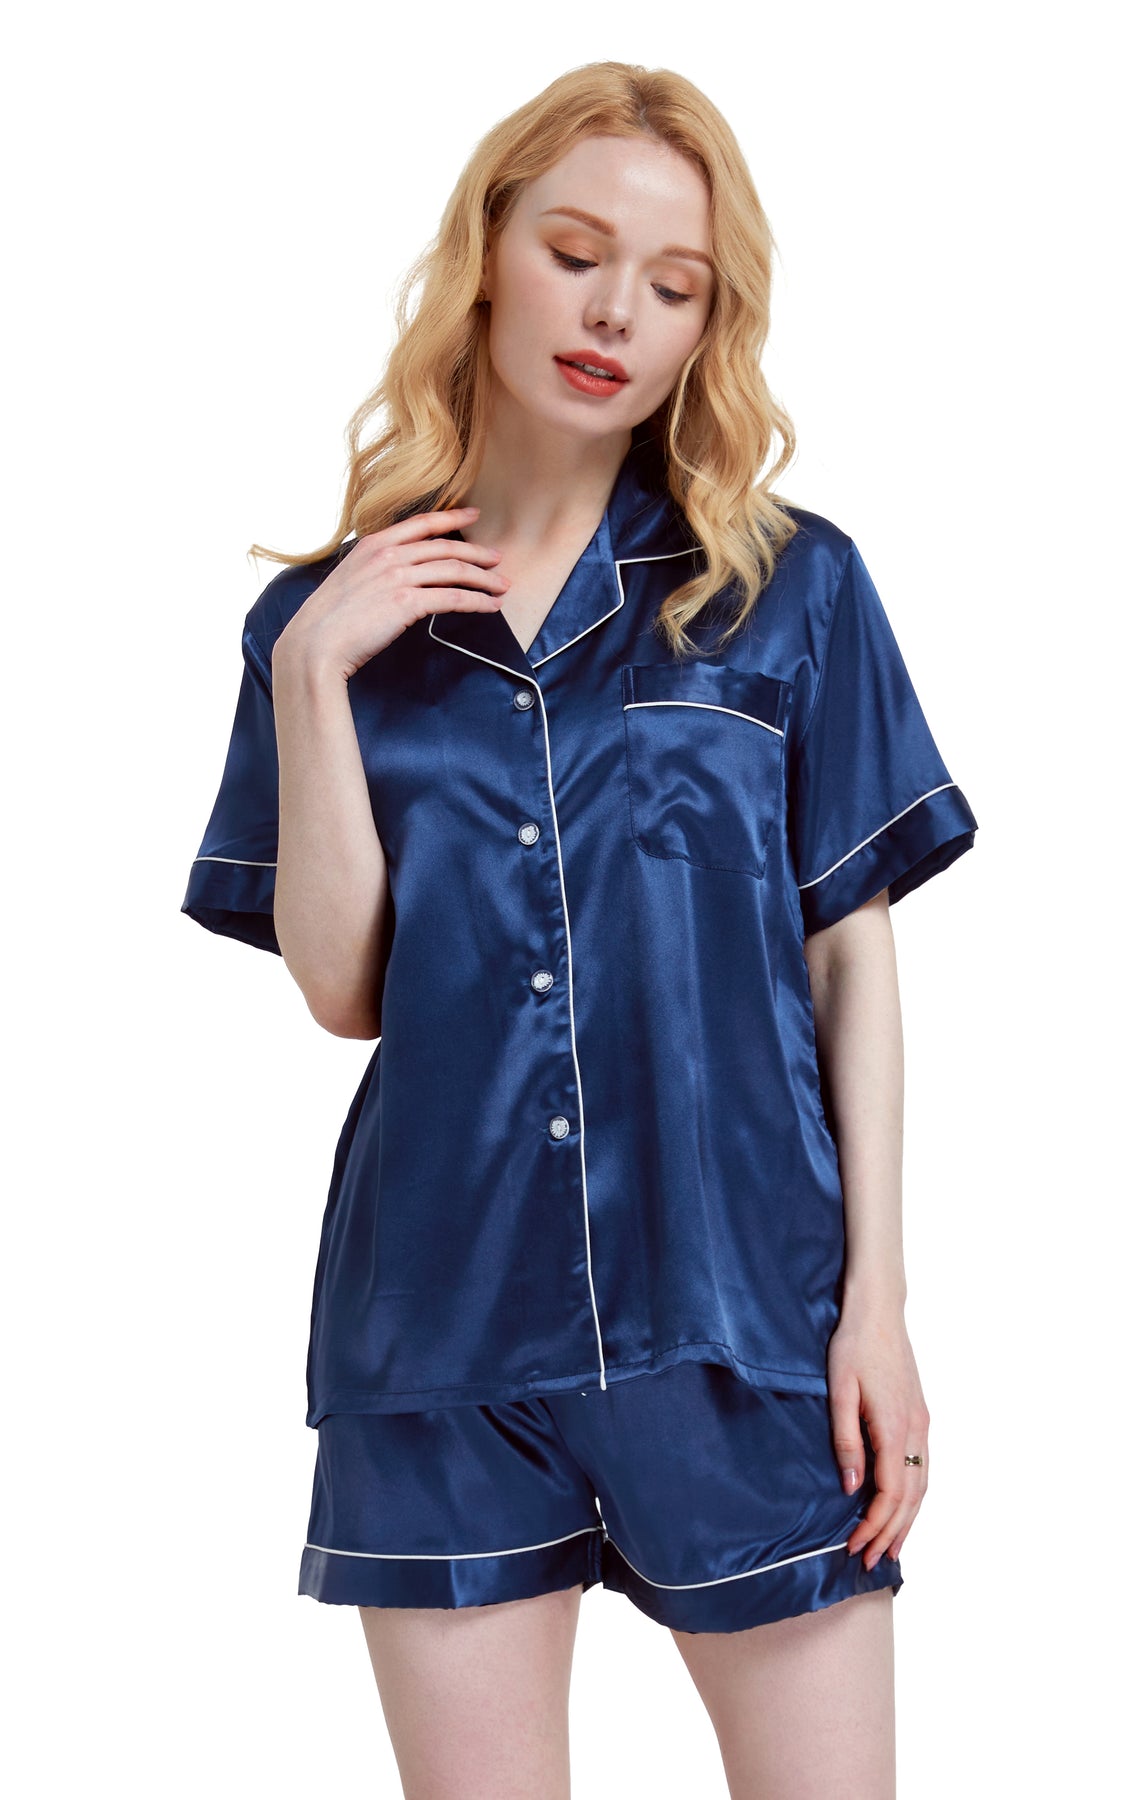 Women S Silk Satin Pajama Set Short Sleeve Navy Blue With White Pipin Tony And Candice